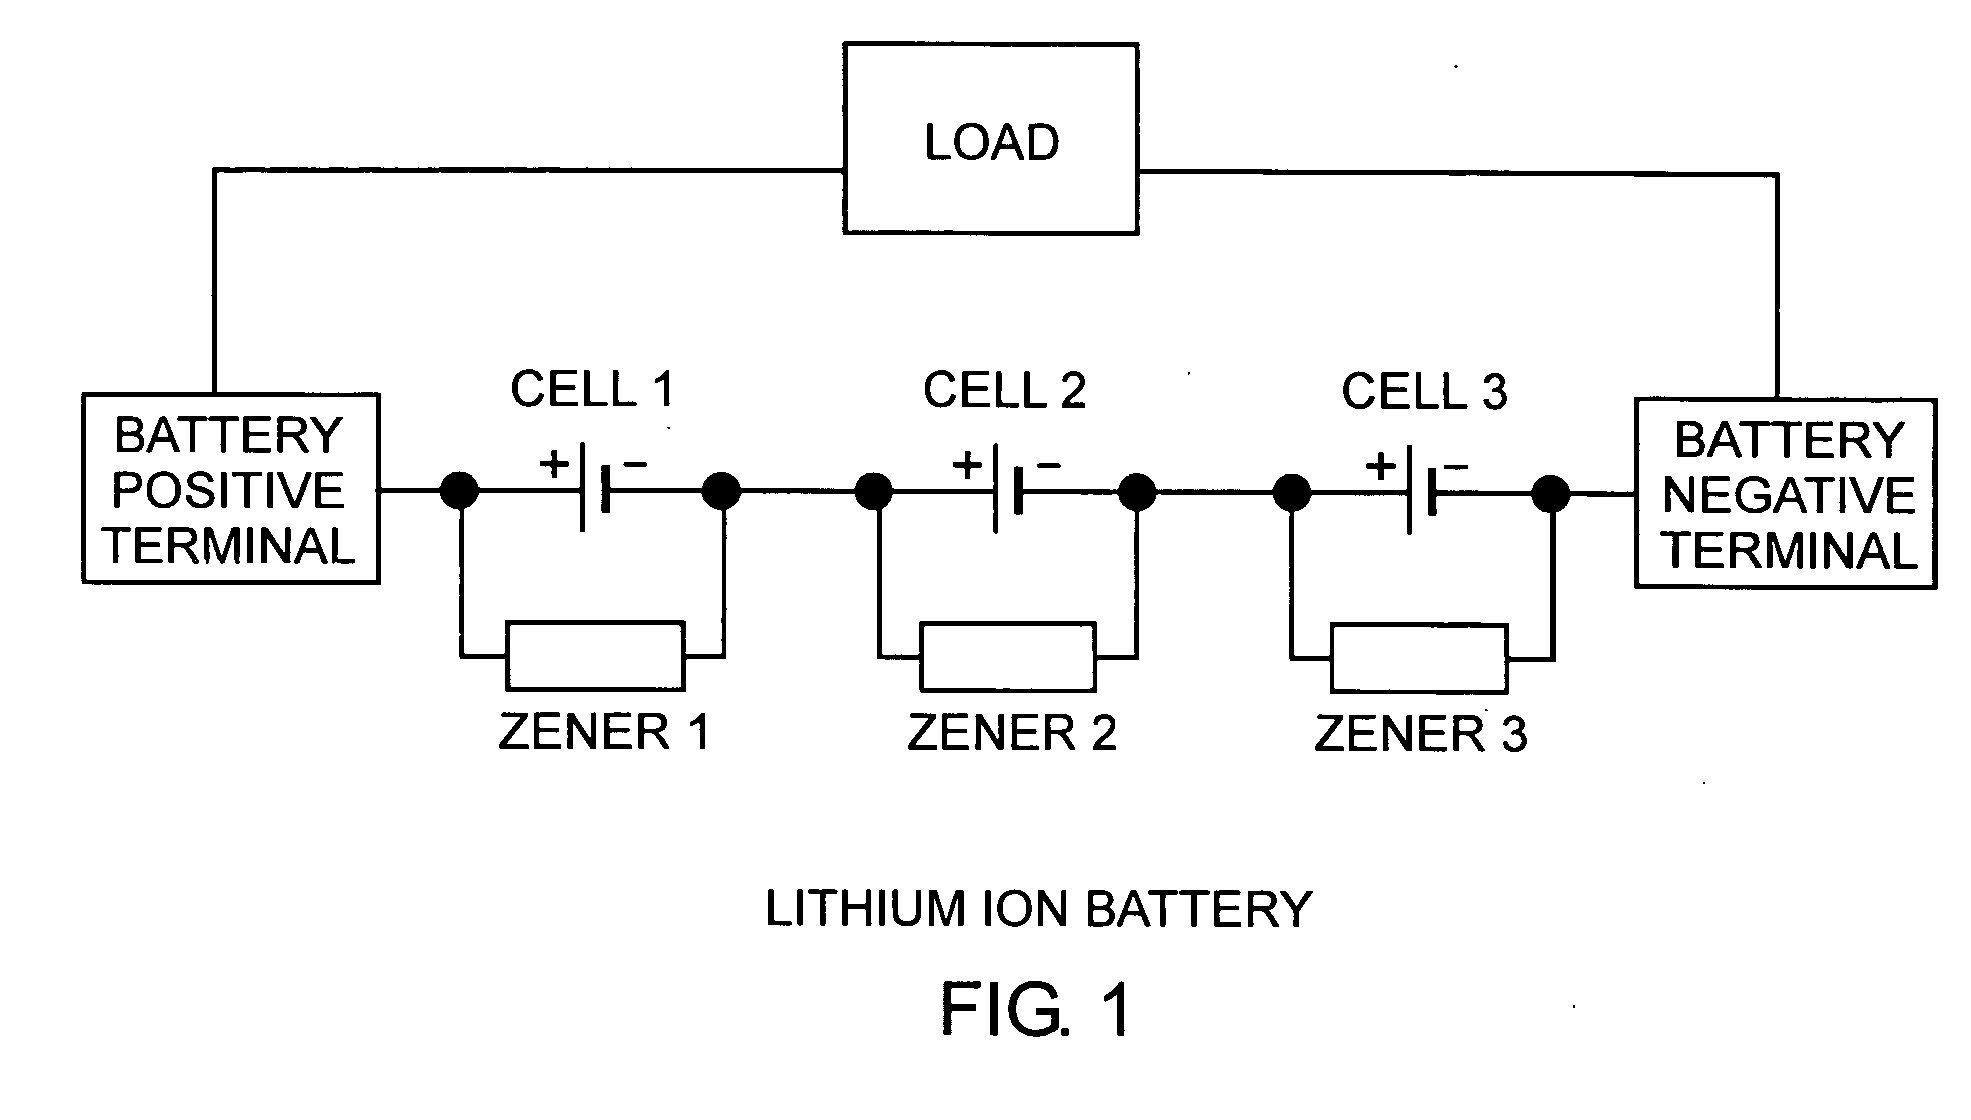 Balanced lithium ion battery